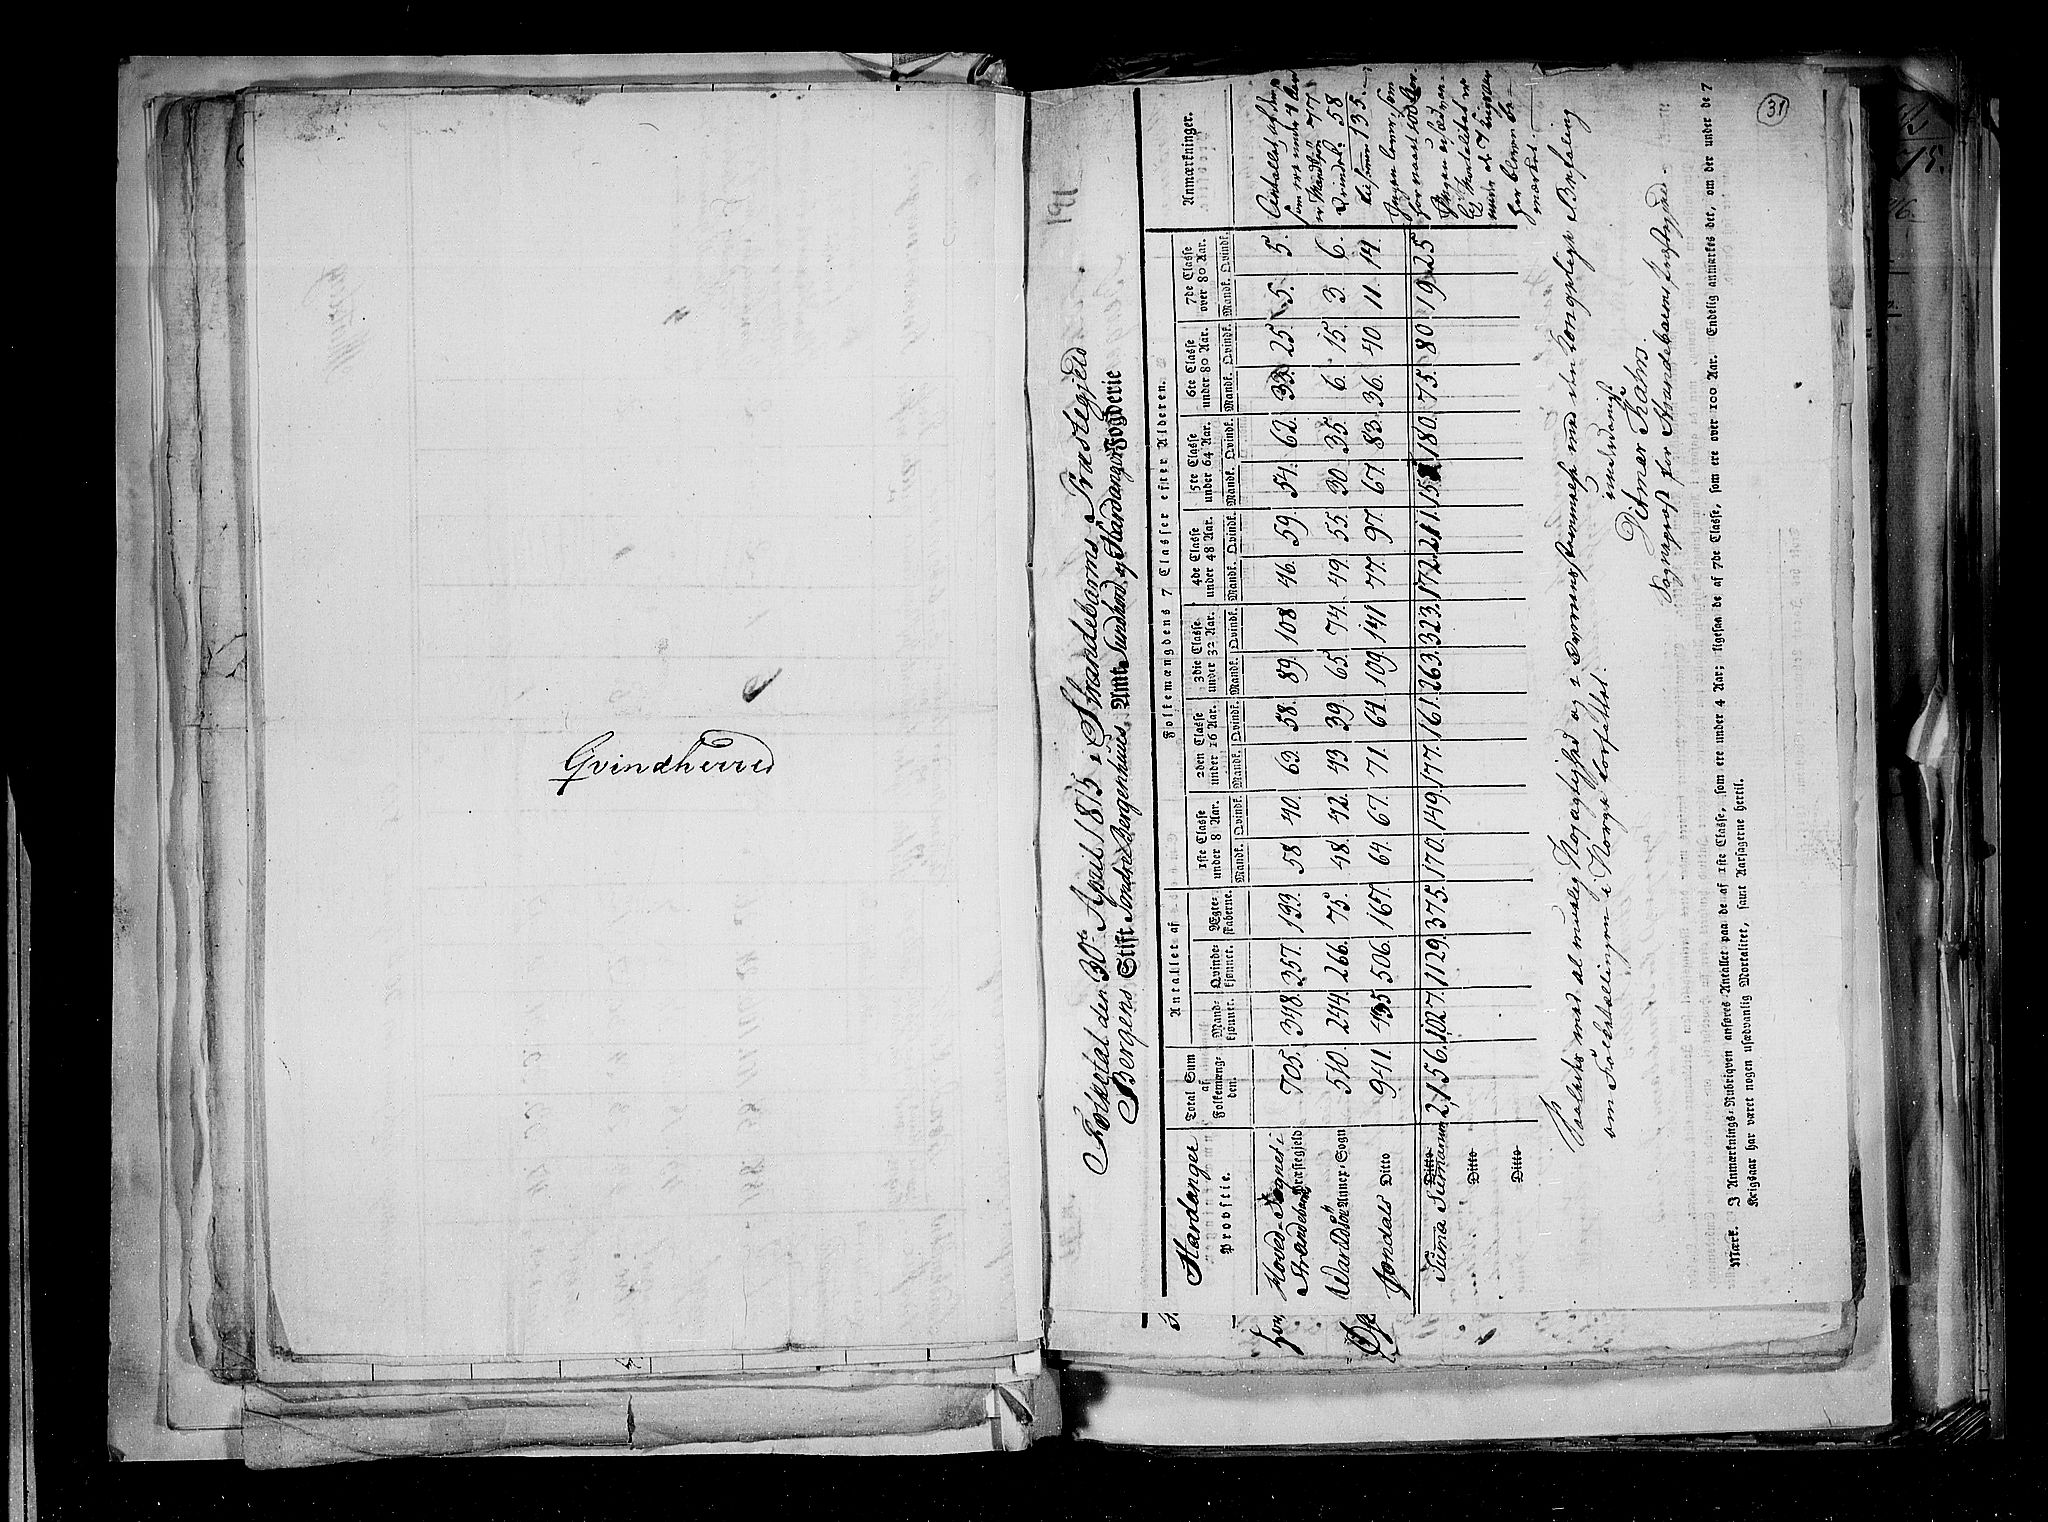 RA, Census 1815, vol. 2: Bergen stift and Trondheim stift, 1815, p. 23